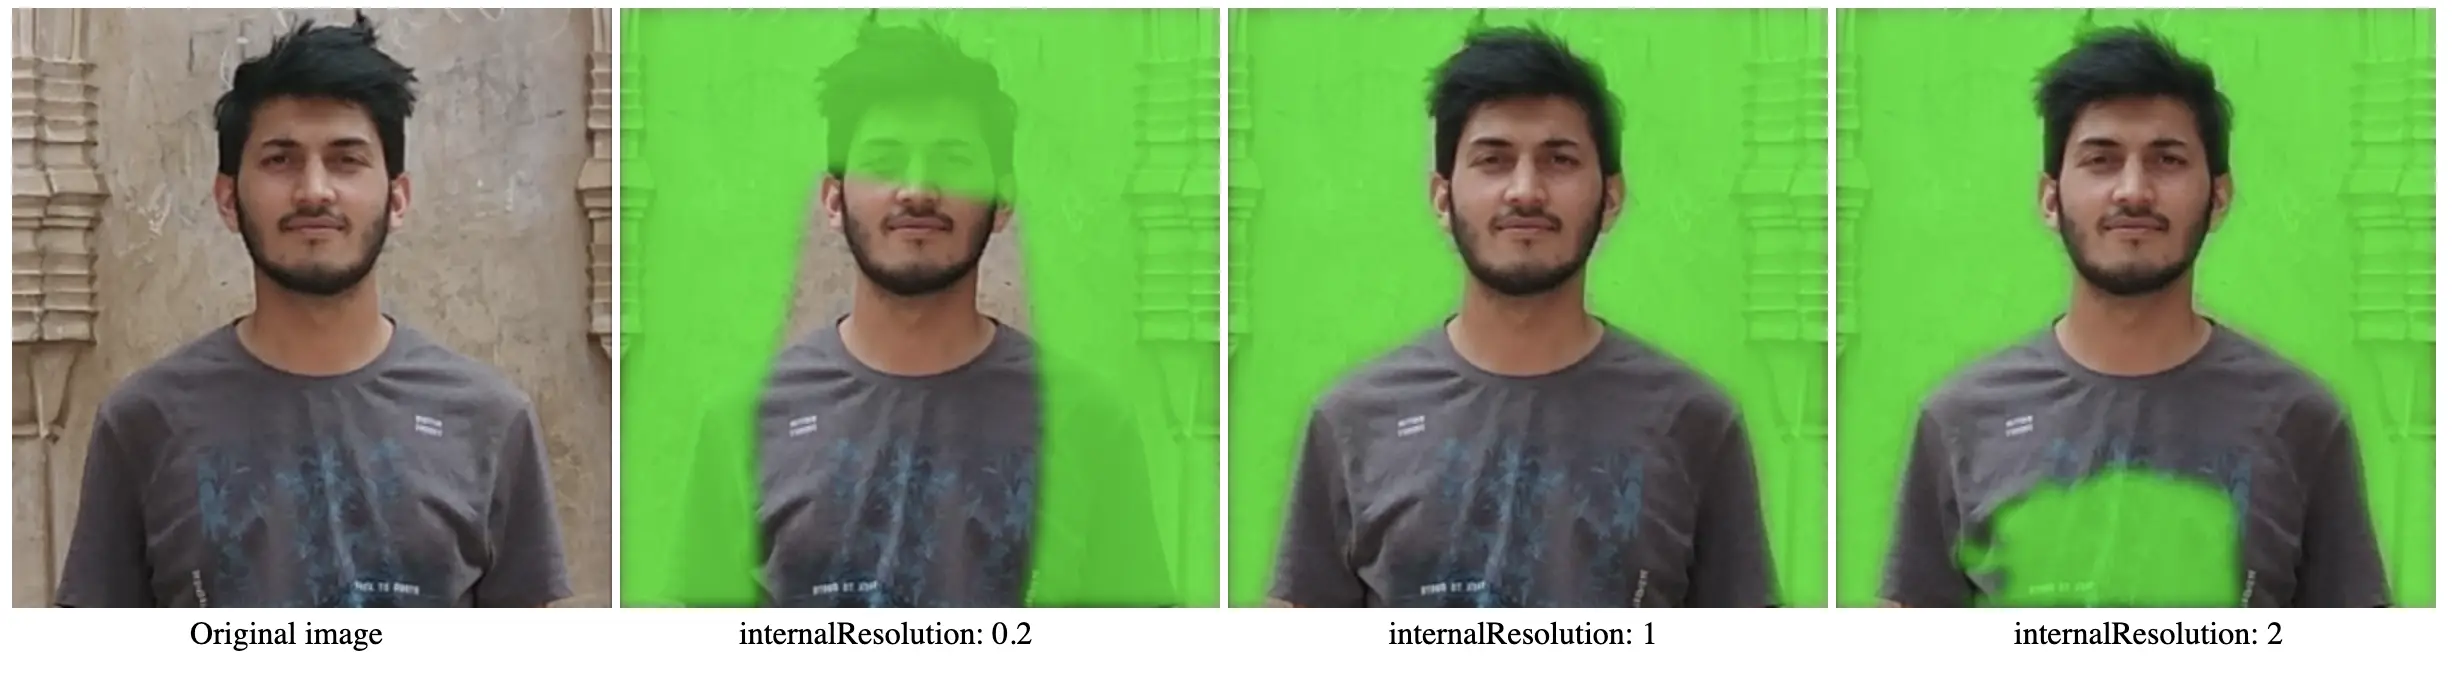 image showing segmentation with different internalResolution values